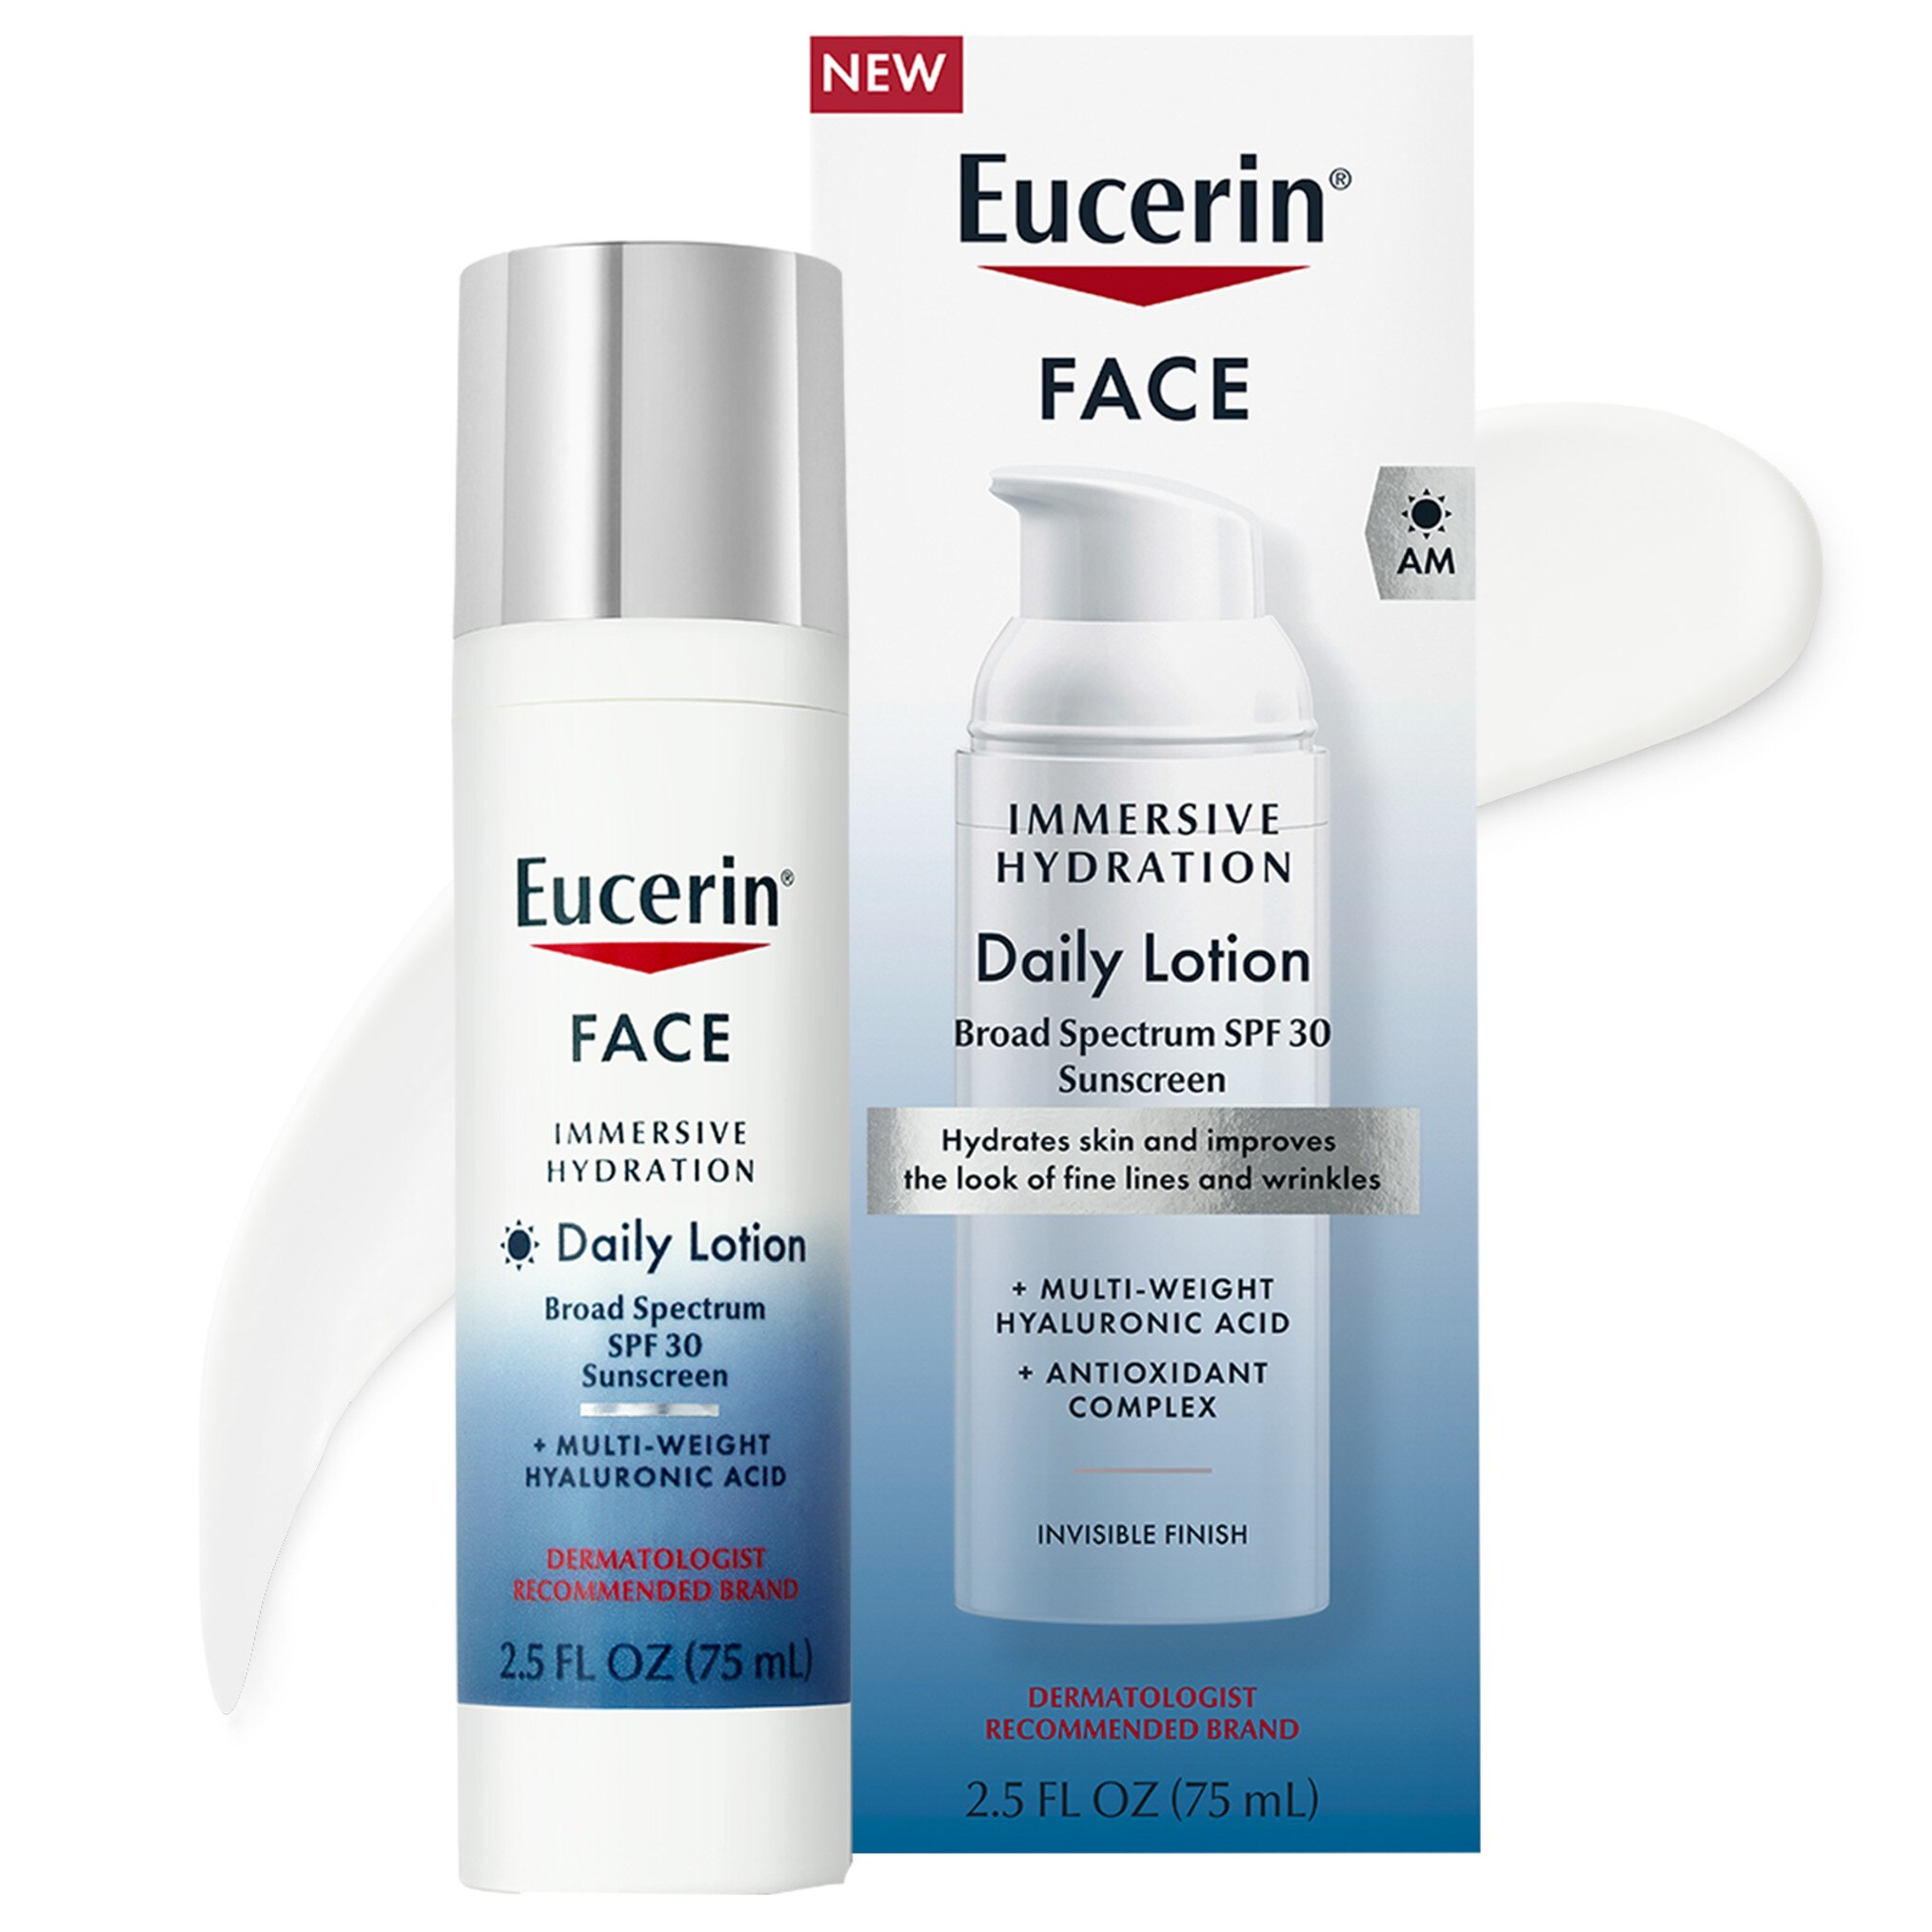 Eucerin Face Immersive Hydration Daily Lotion Broad Spectrum SPF 30 Sunscreen - 1.7 Oz , CVS